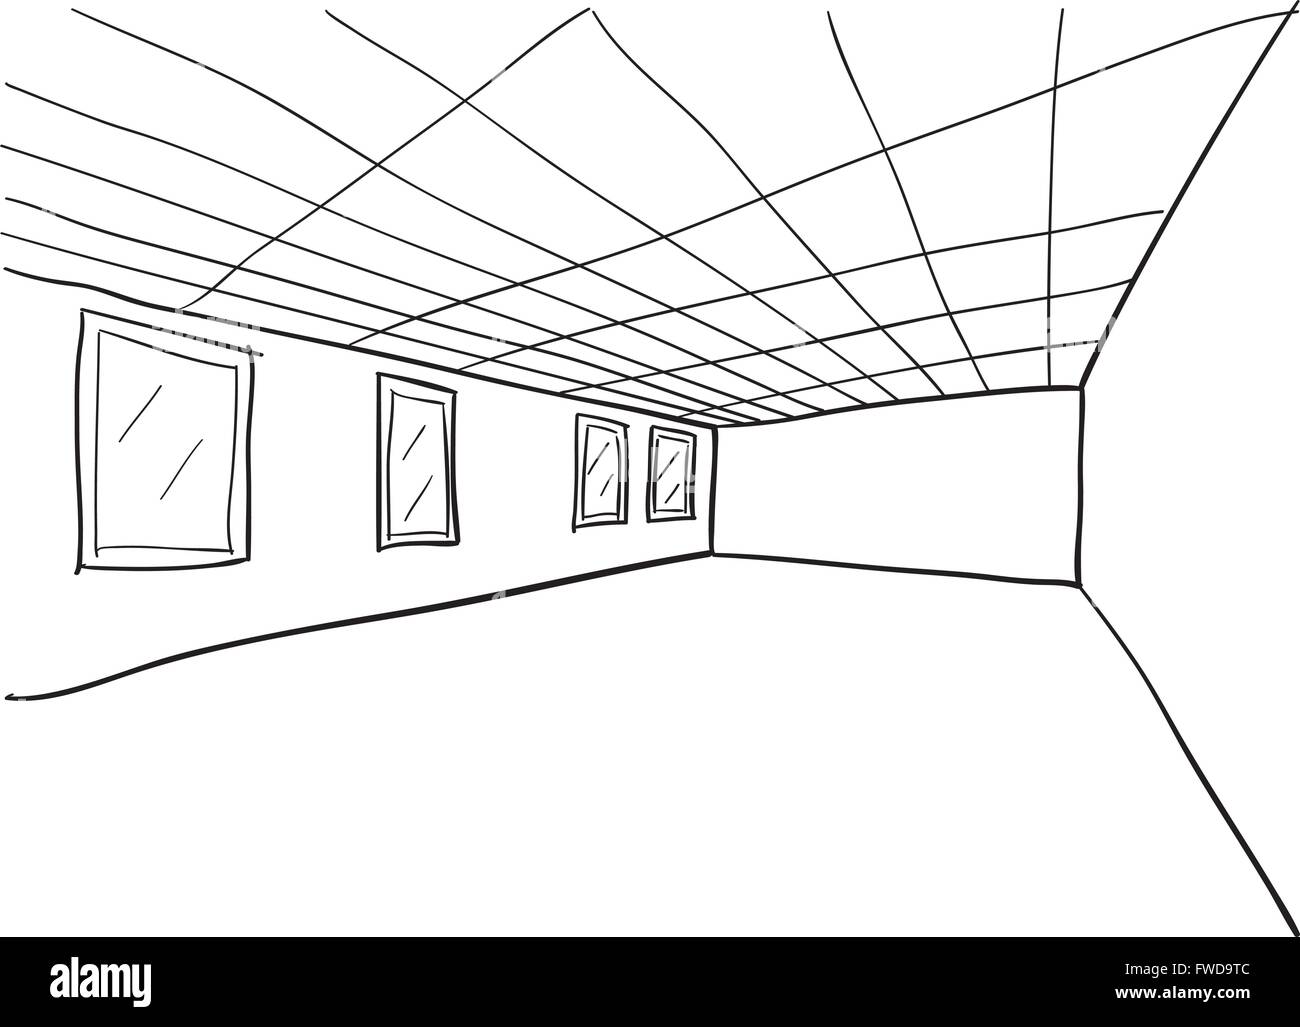 Simple Room Perspective Doodle Sketch Stock Vector Art